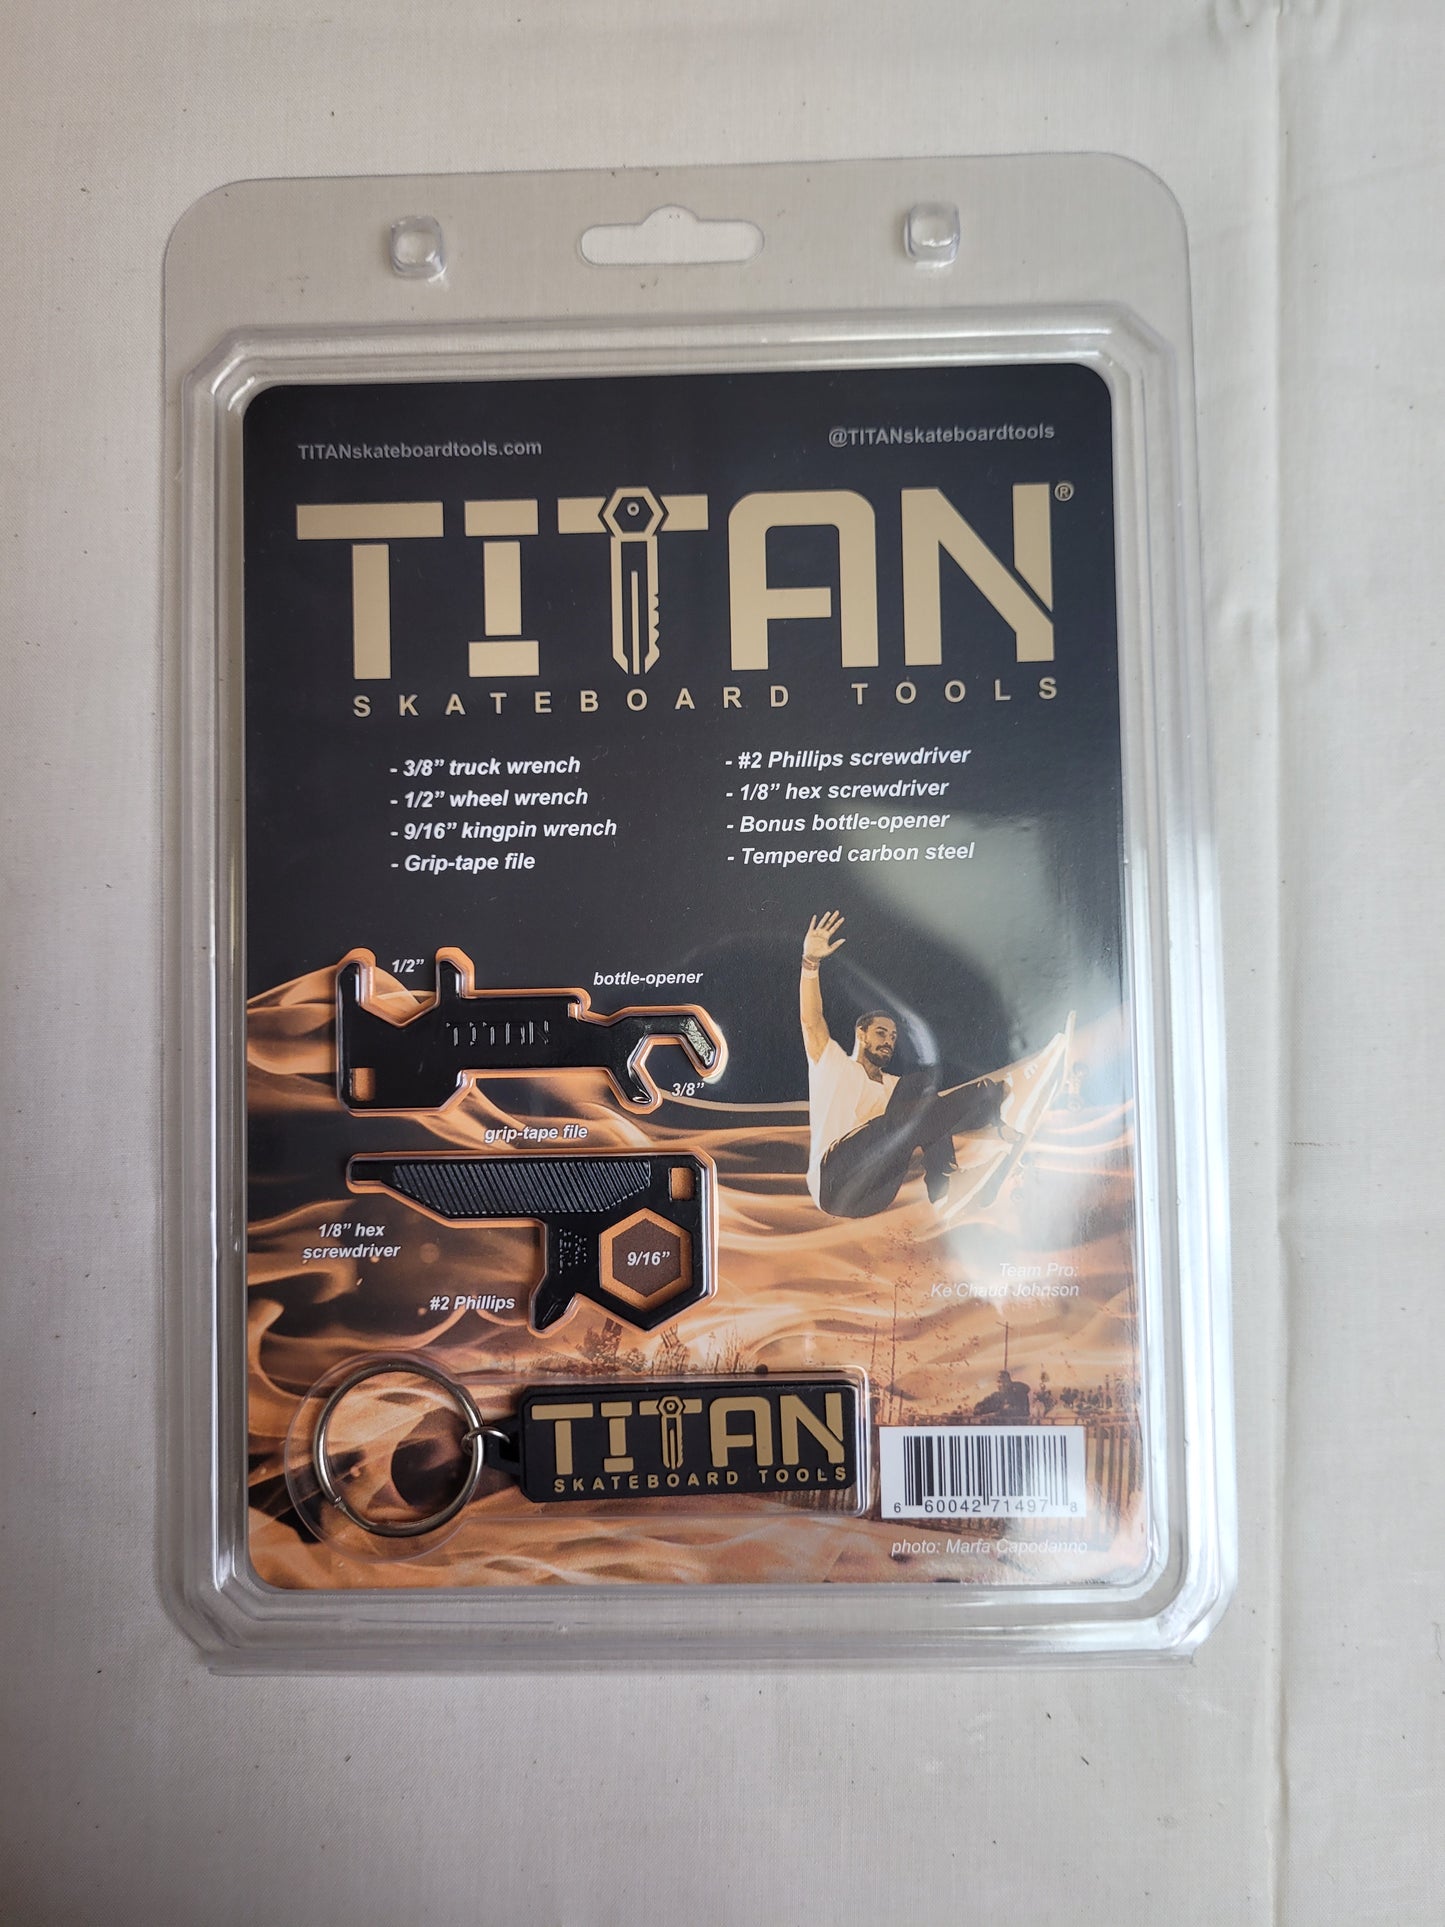 Titan, skate tool